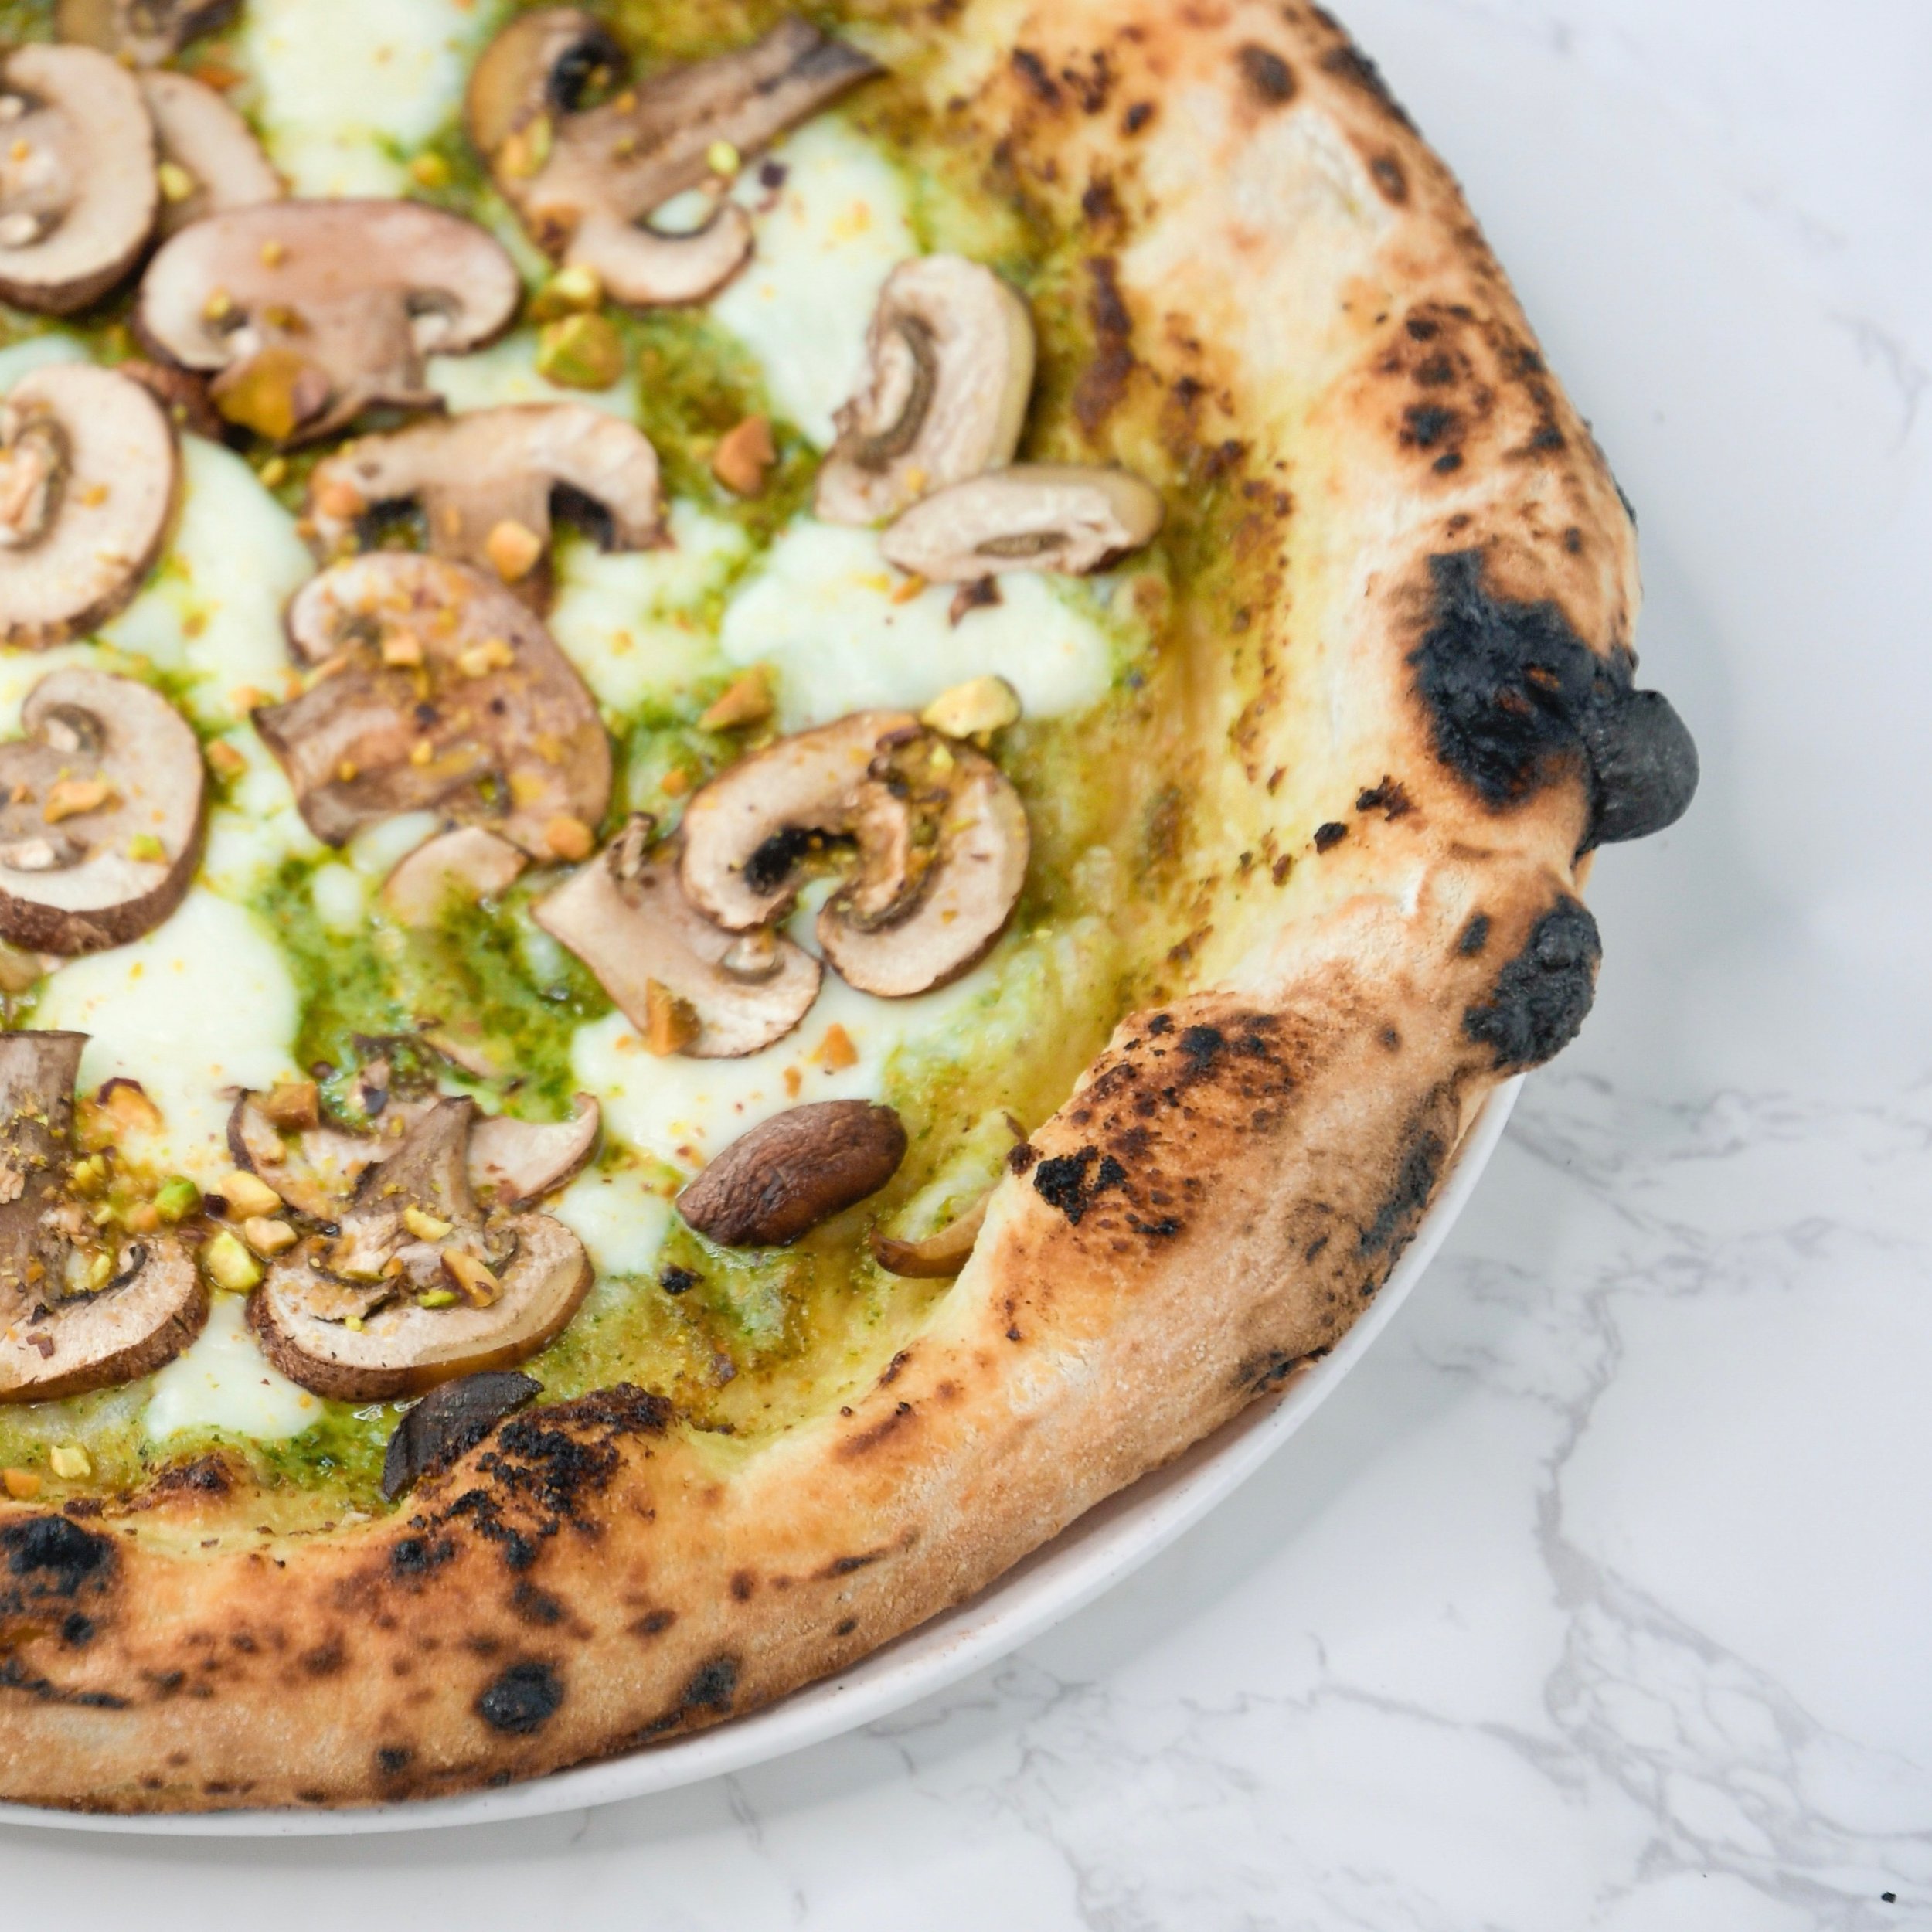 Who knew pistachios could steal so many hearts? 😍🍕 Mamma Mia, Pistachina, you&rsquo;re a slice of pizza heaven! 💚 
#pizza
#chicago
#pizzanapoletana 
#strapolipizza